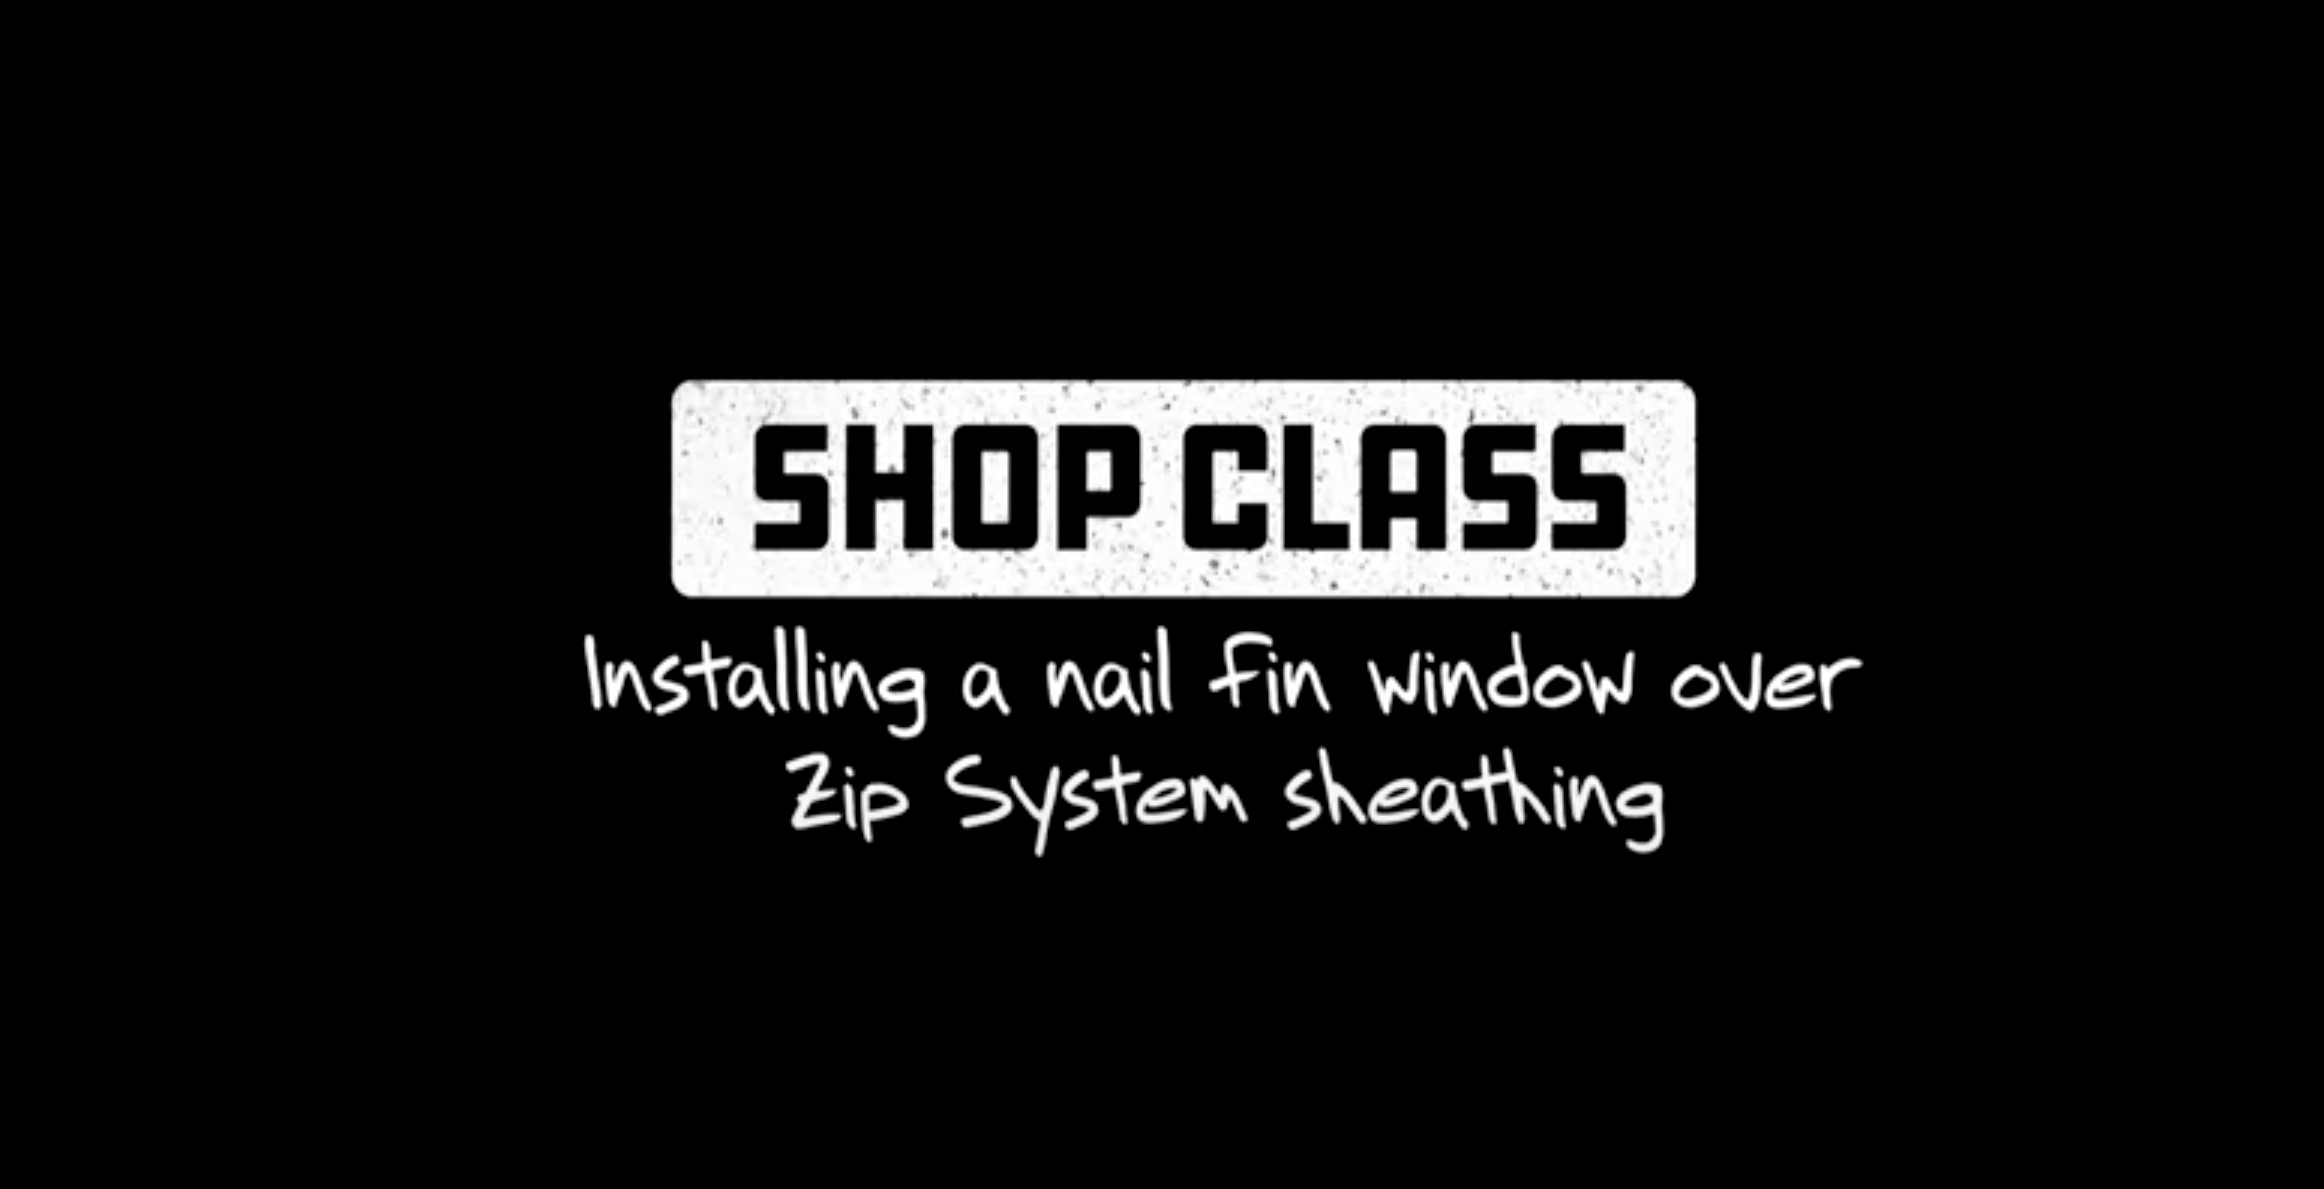 shop class video heading - zip system sheathing